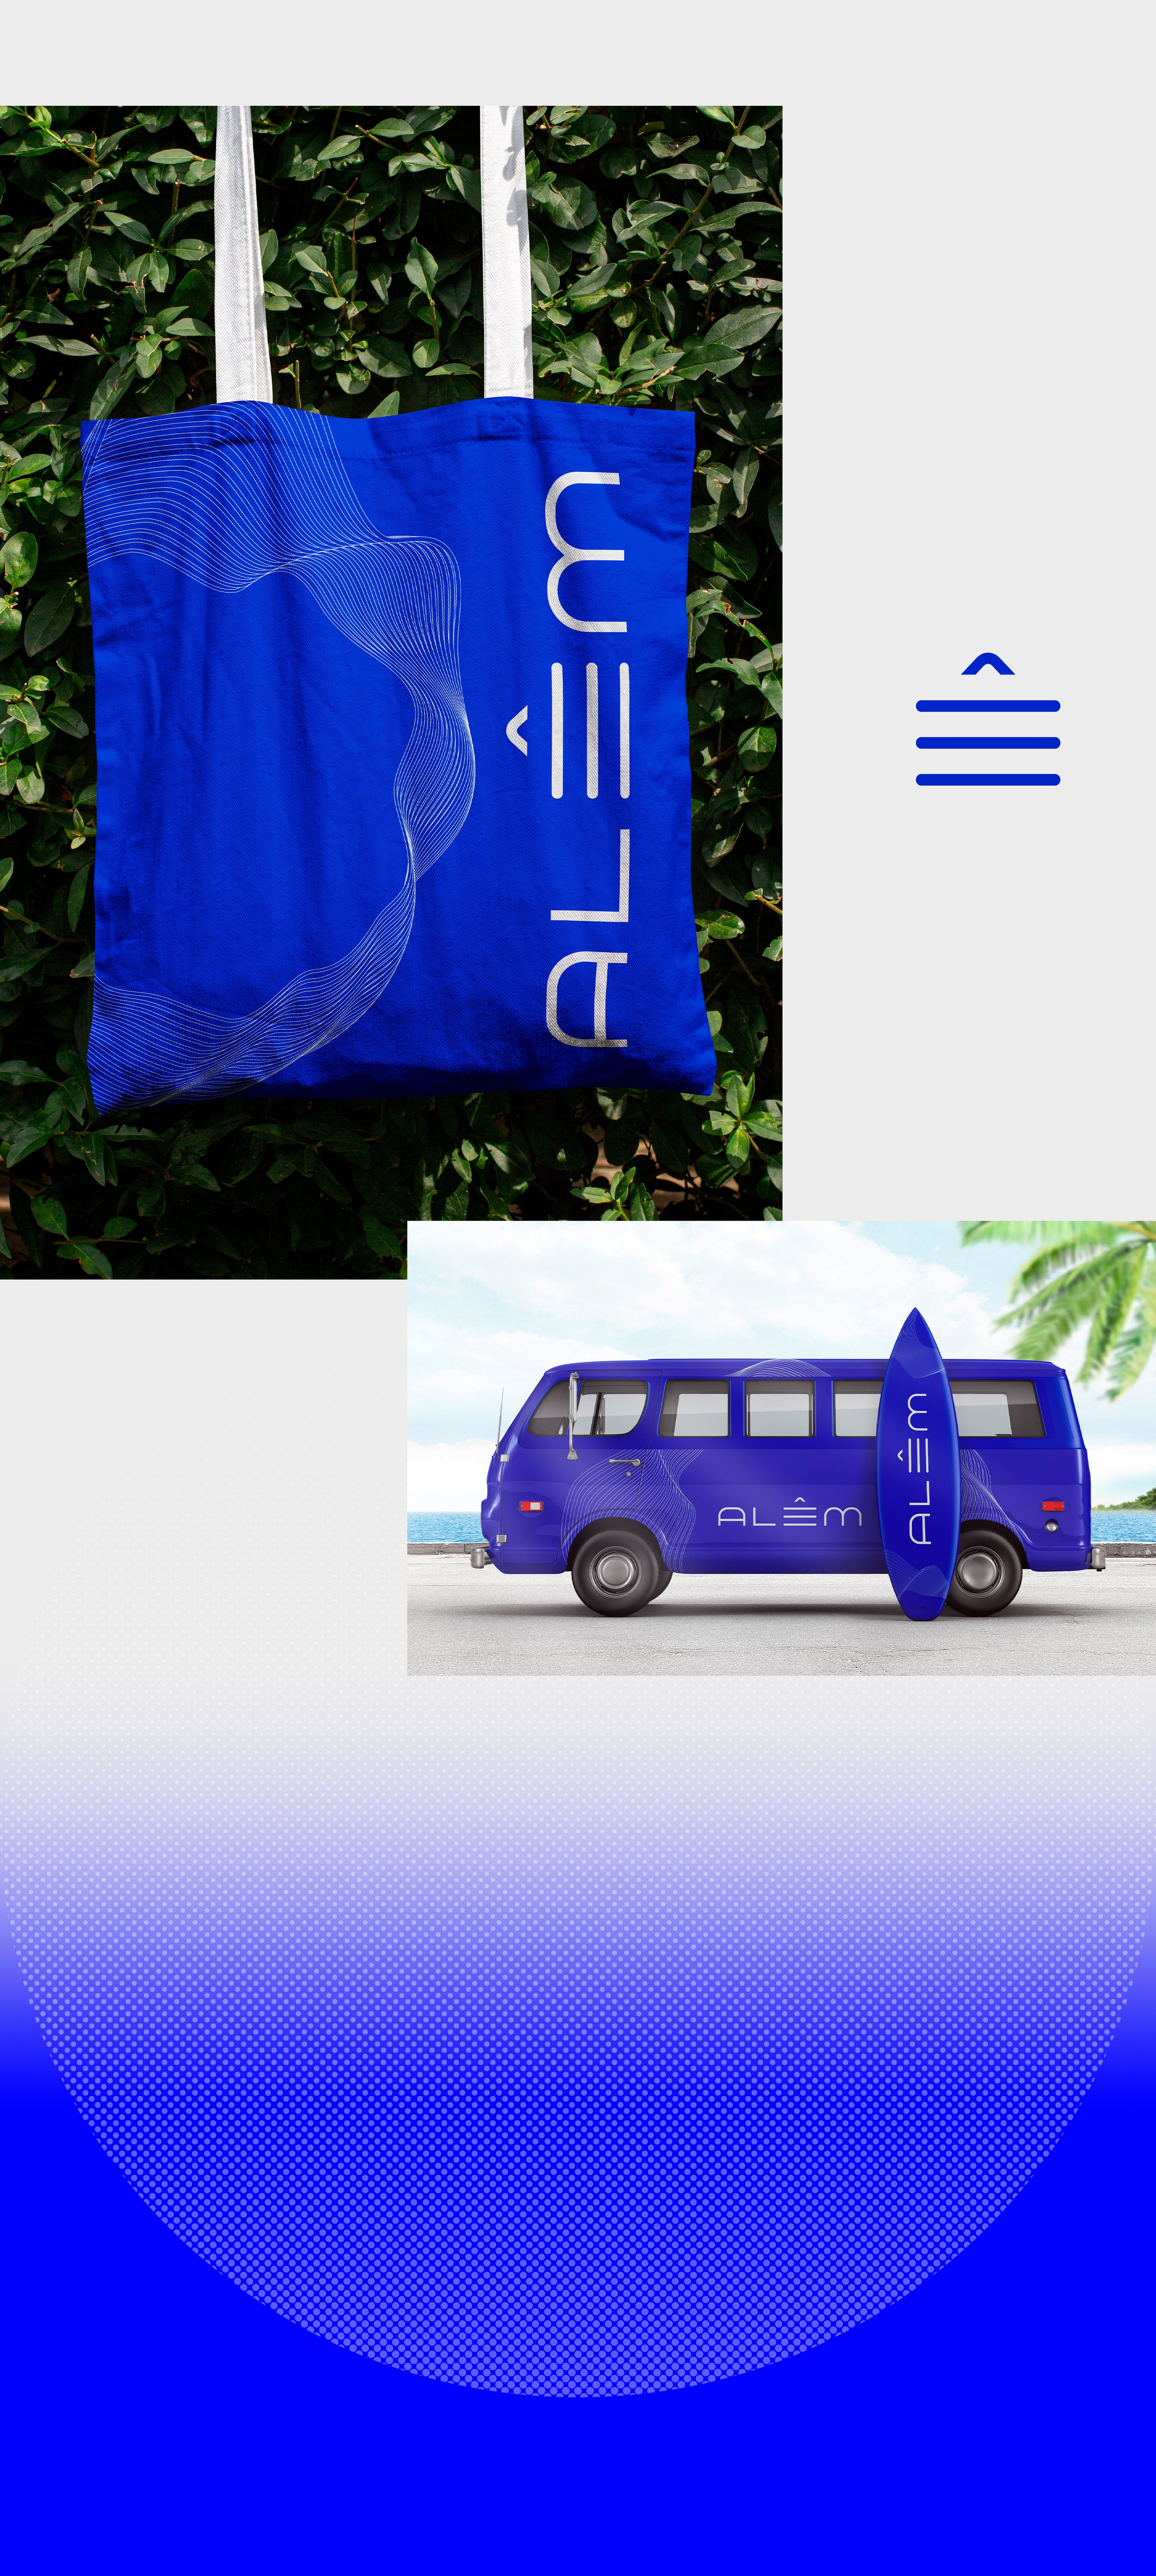 daniel-zito-alem-identidade-visual-logo-branding-2.jpg